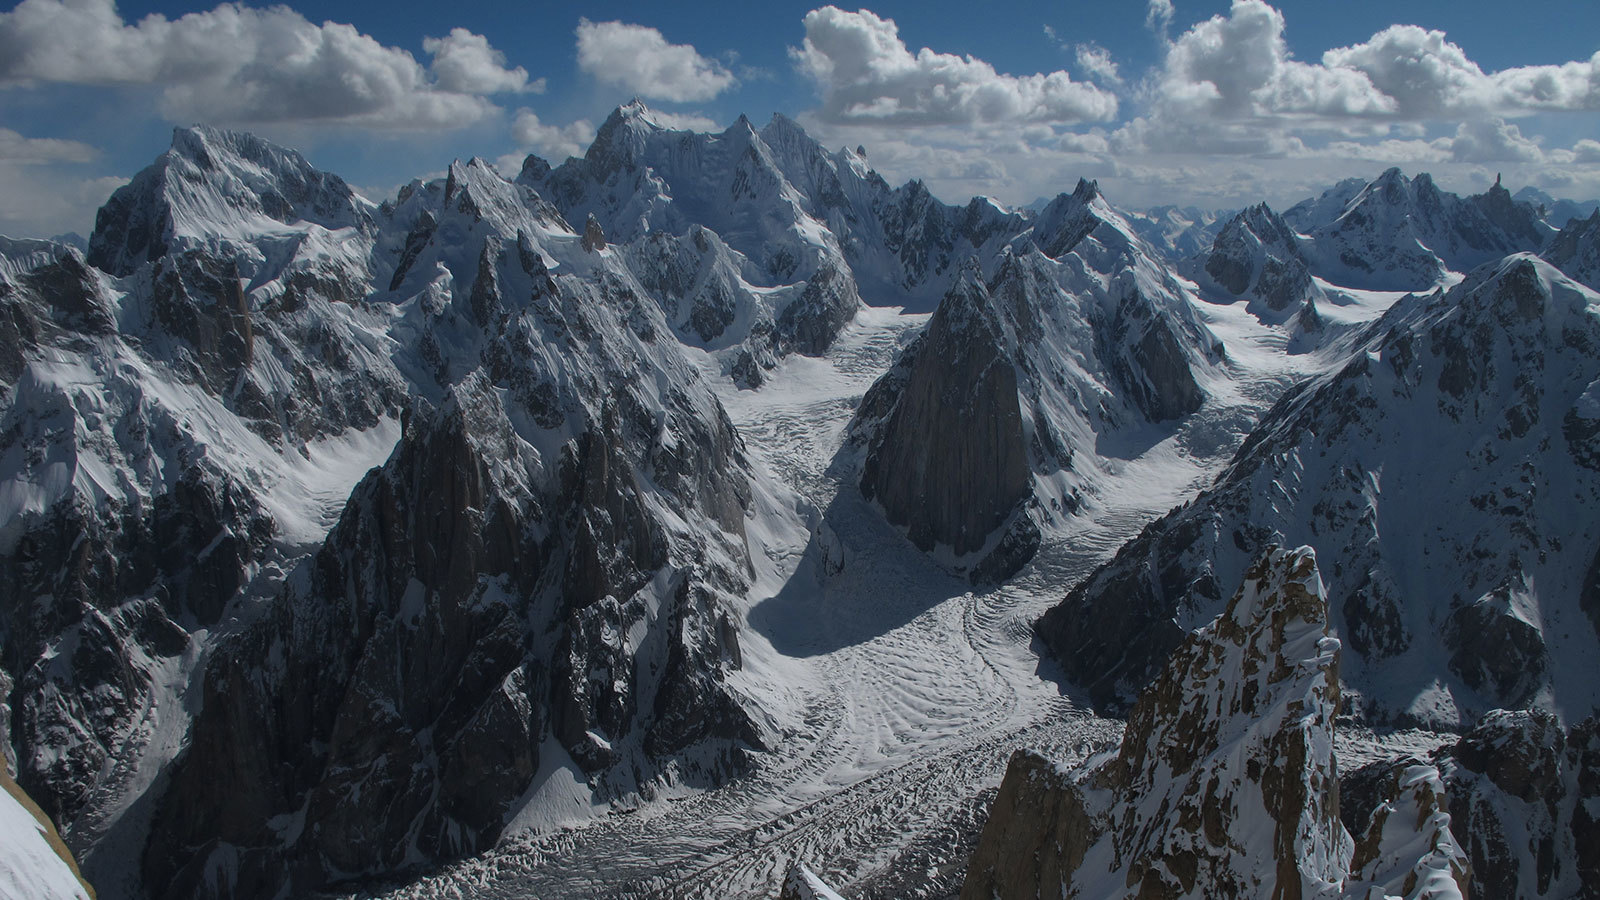 Glaciers in the Karakoram Range of Pakistan